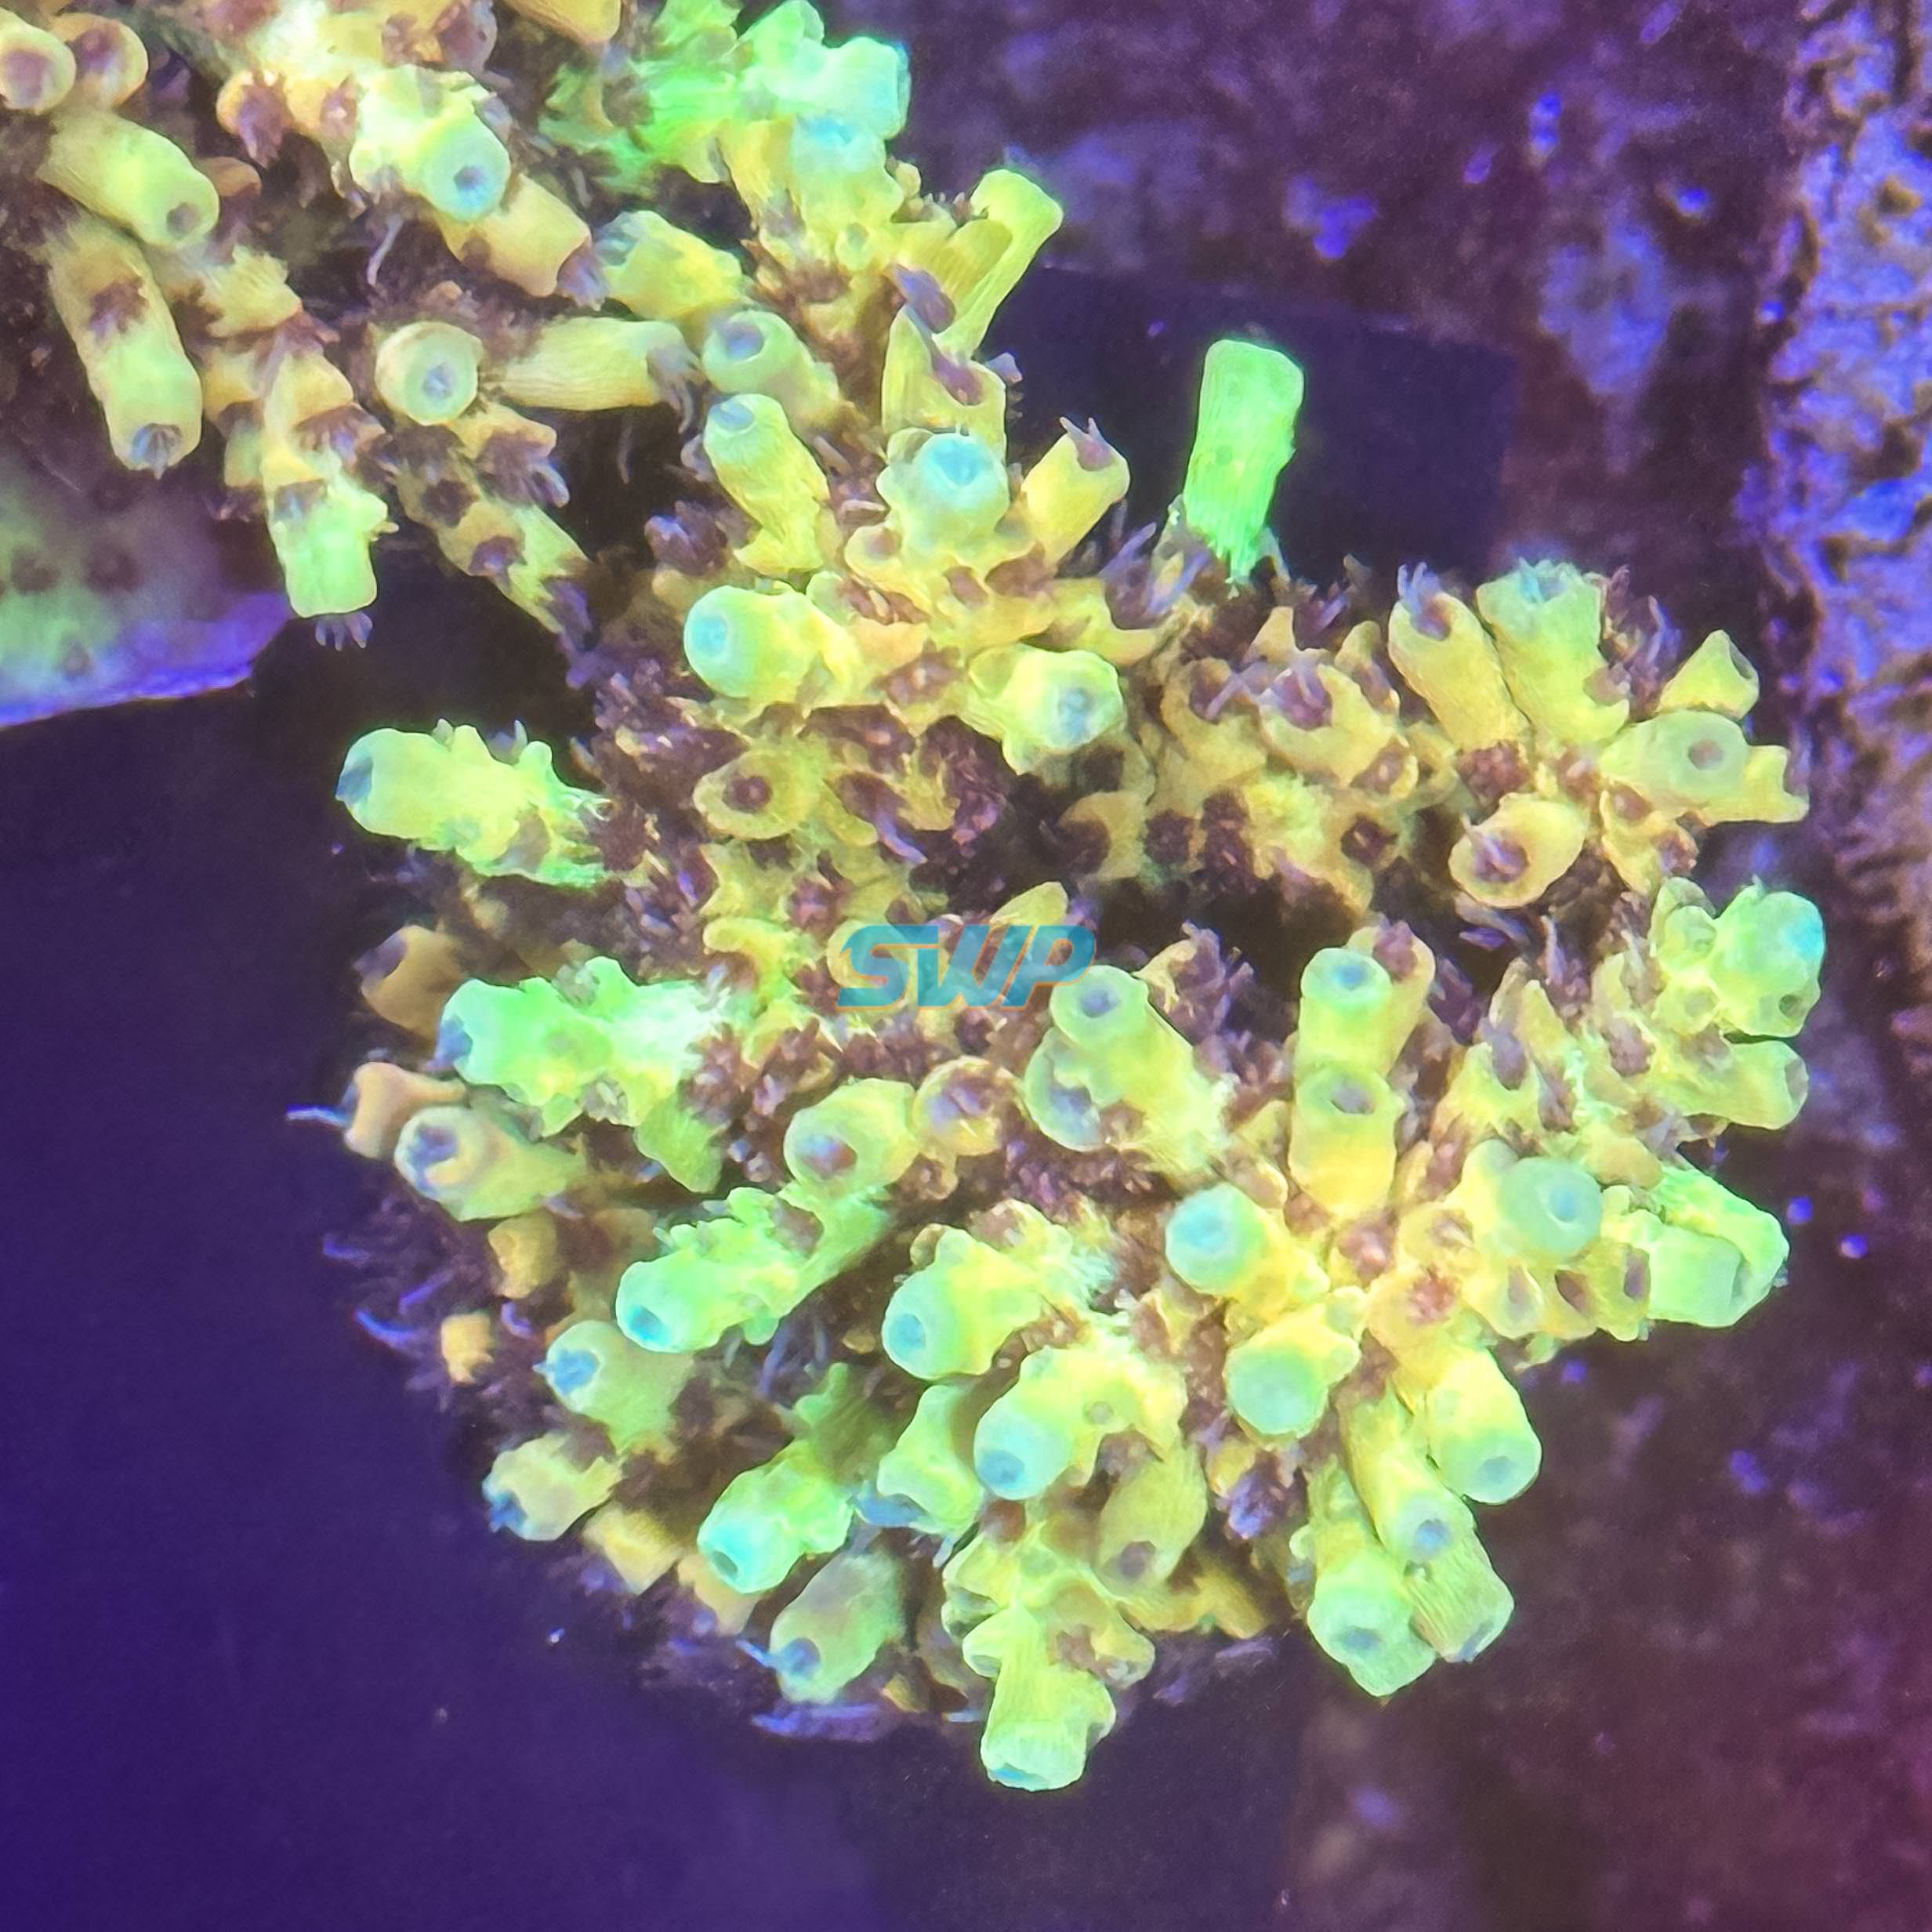 Acropora Coral Canada - Frag Garage